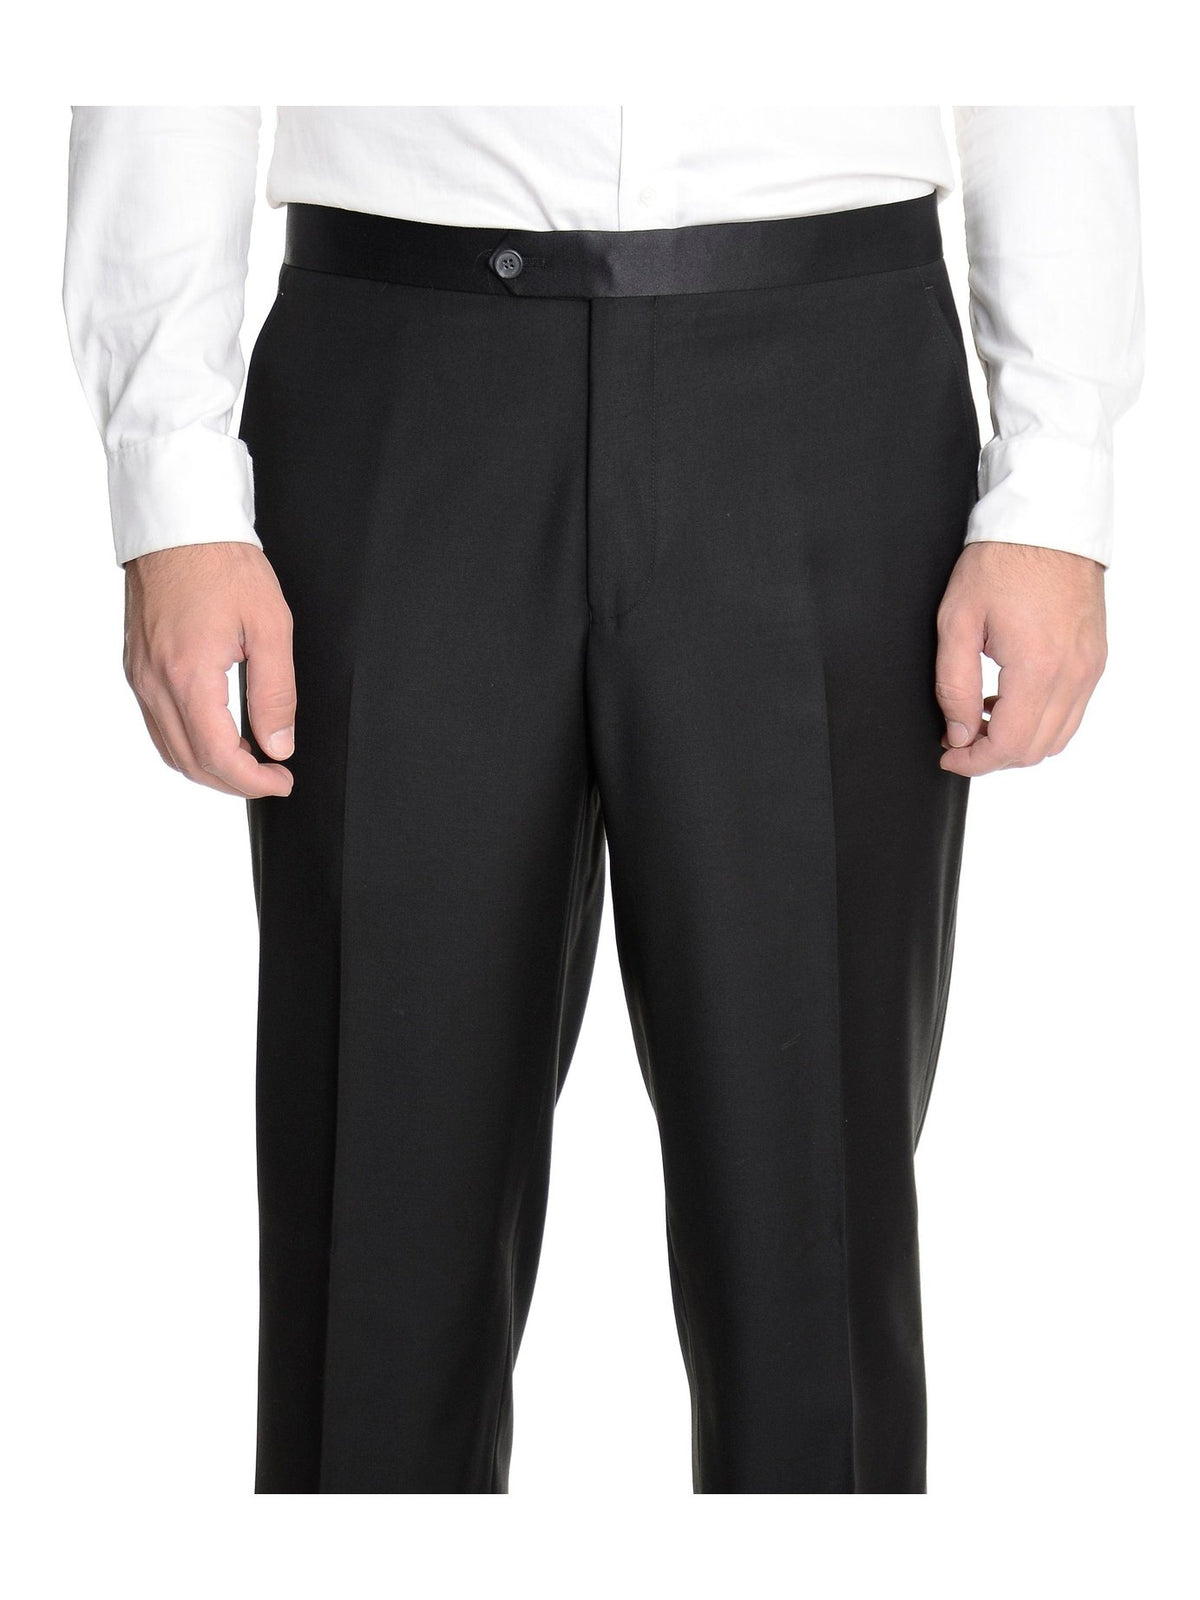 Raphael TUXEDOS Raphael Solid Black Tuxedo Tux Suit With Satin Stripe On Pants